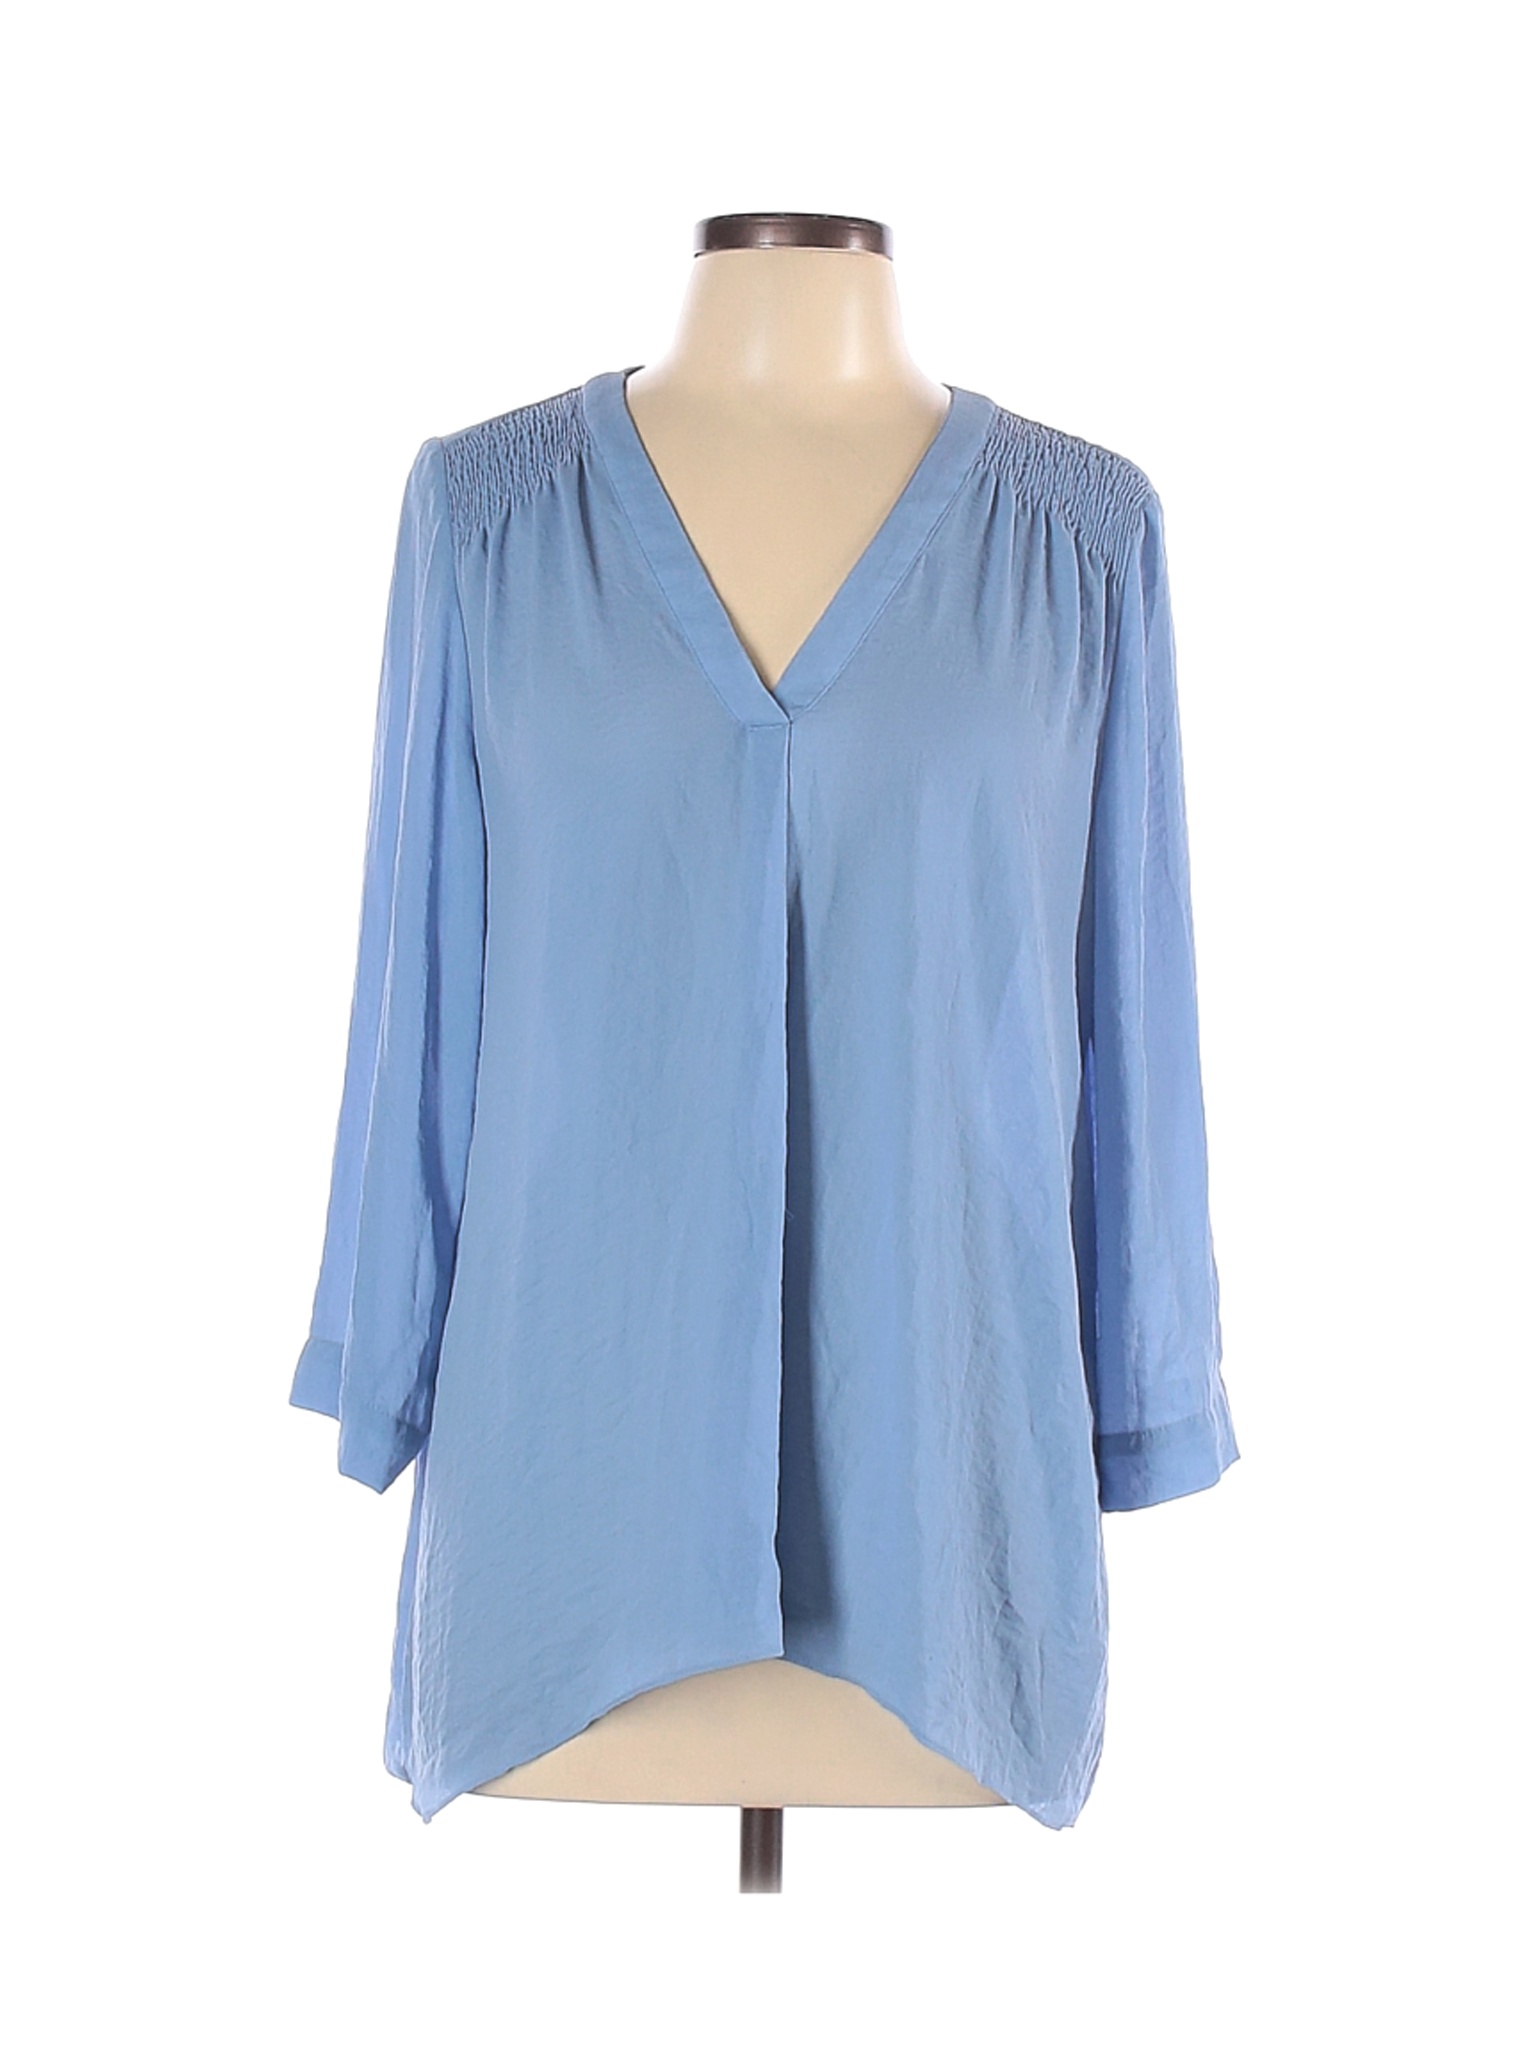 A.n.a. A New Approach Women Blue 3/4 Sleeve Blouse L | eBay